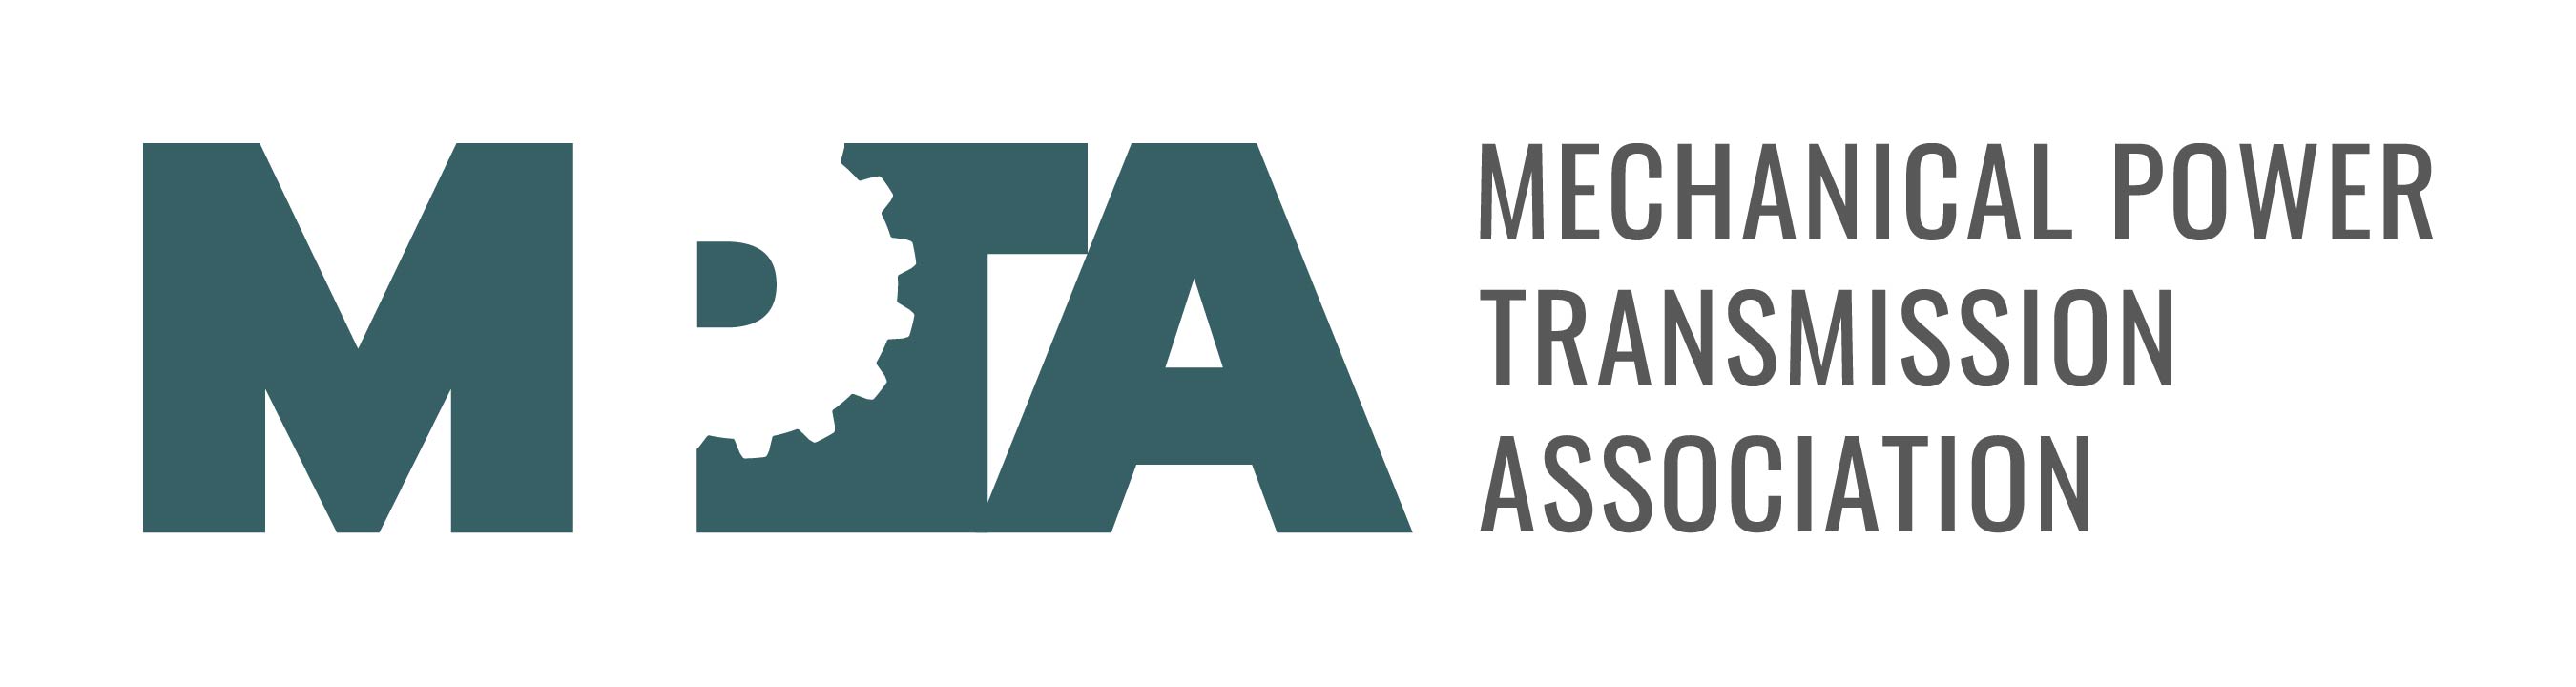 Mechanical Power Transmission Association